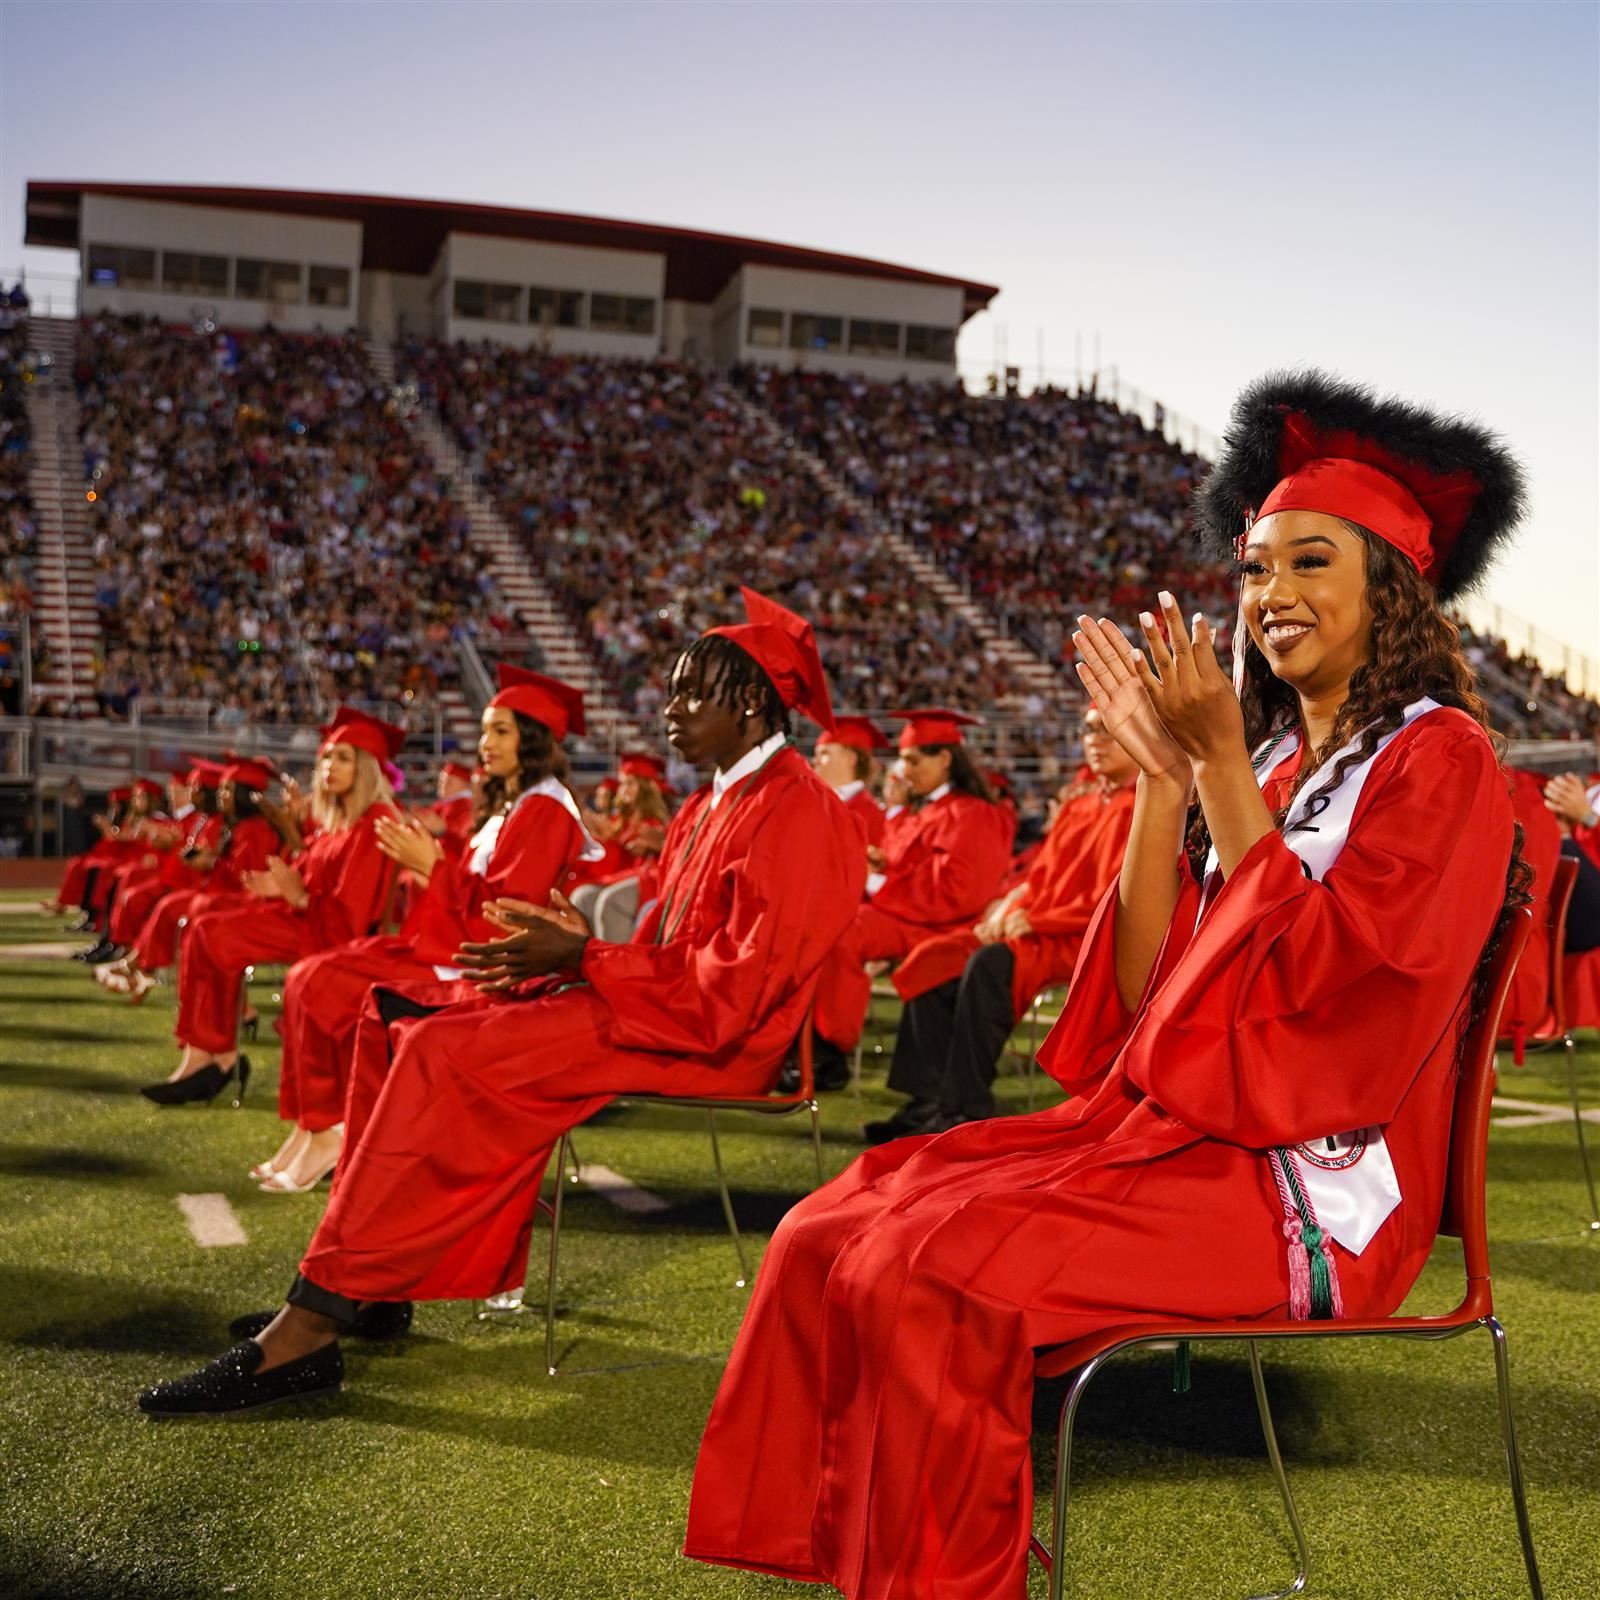  Herald-Banner Story: Graduation ceremony highlights community spirit